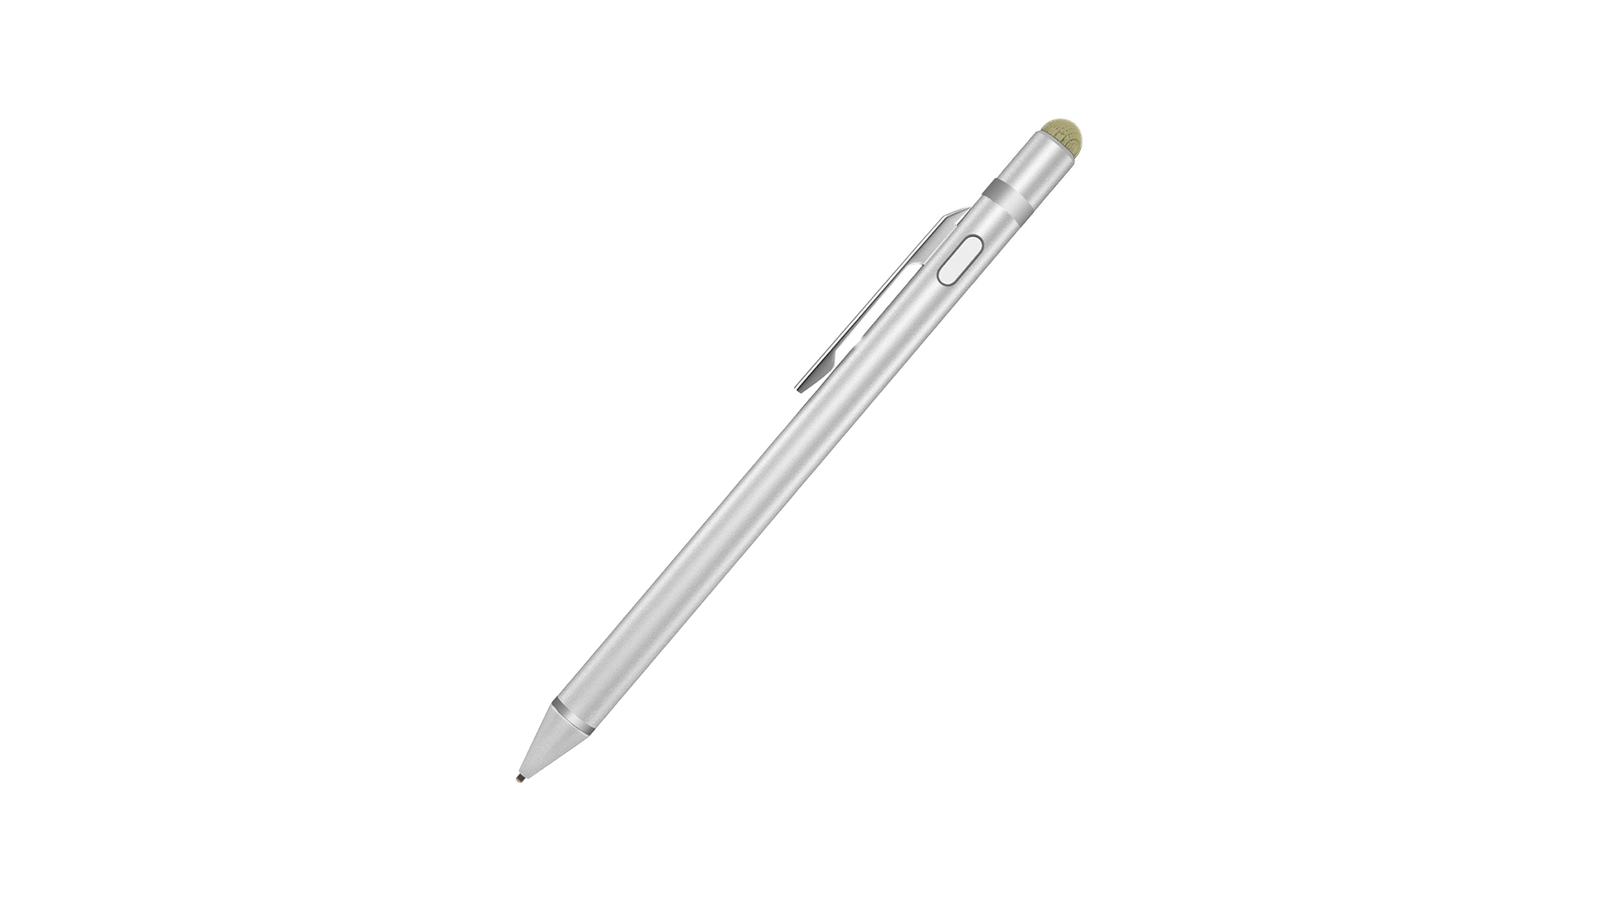 MoKo Active Stylus Pen - Best budget option